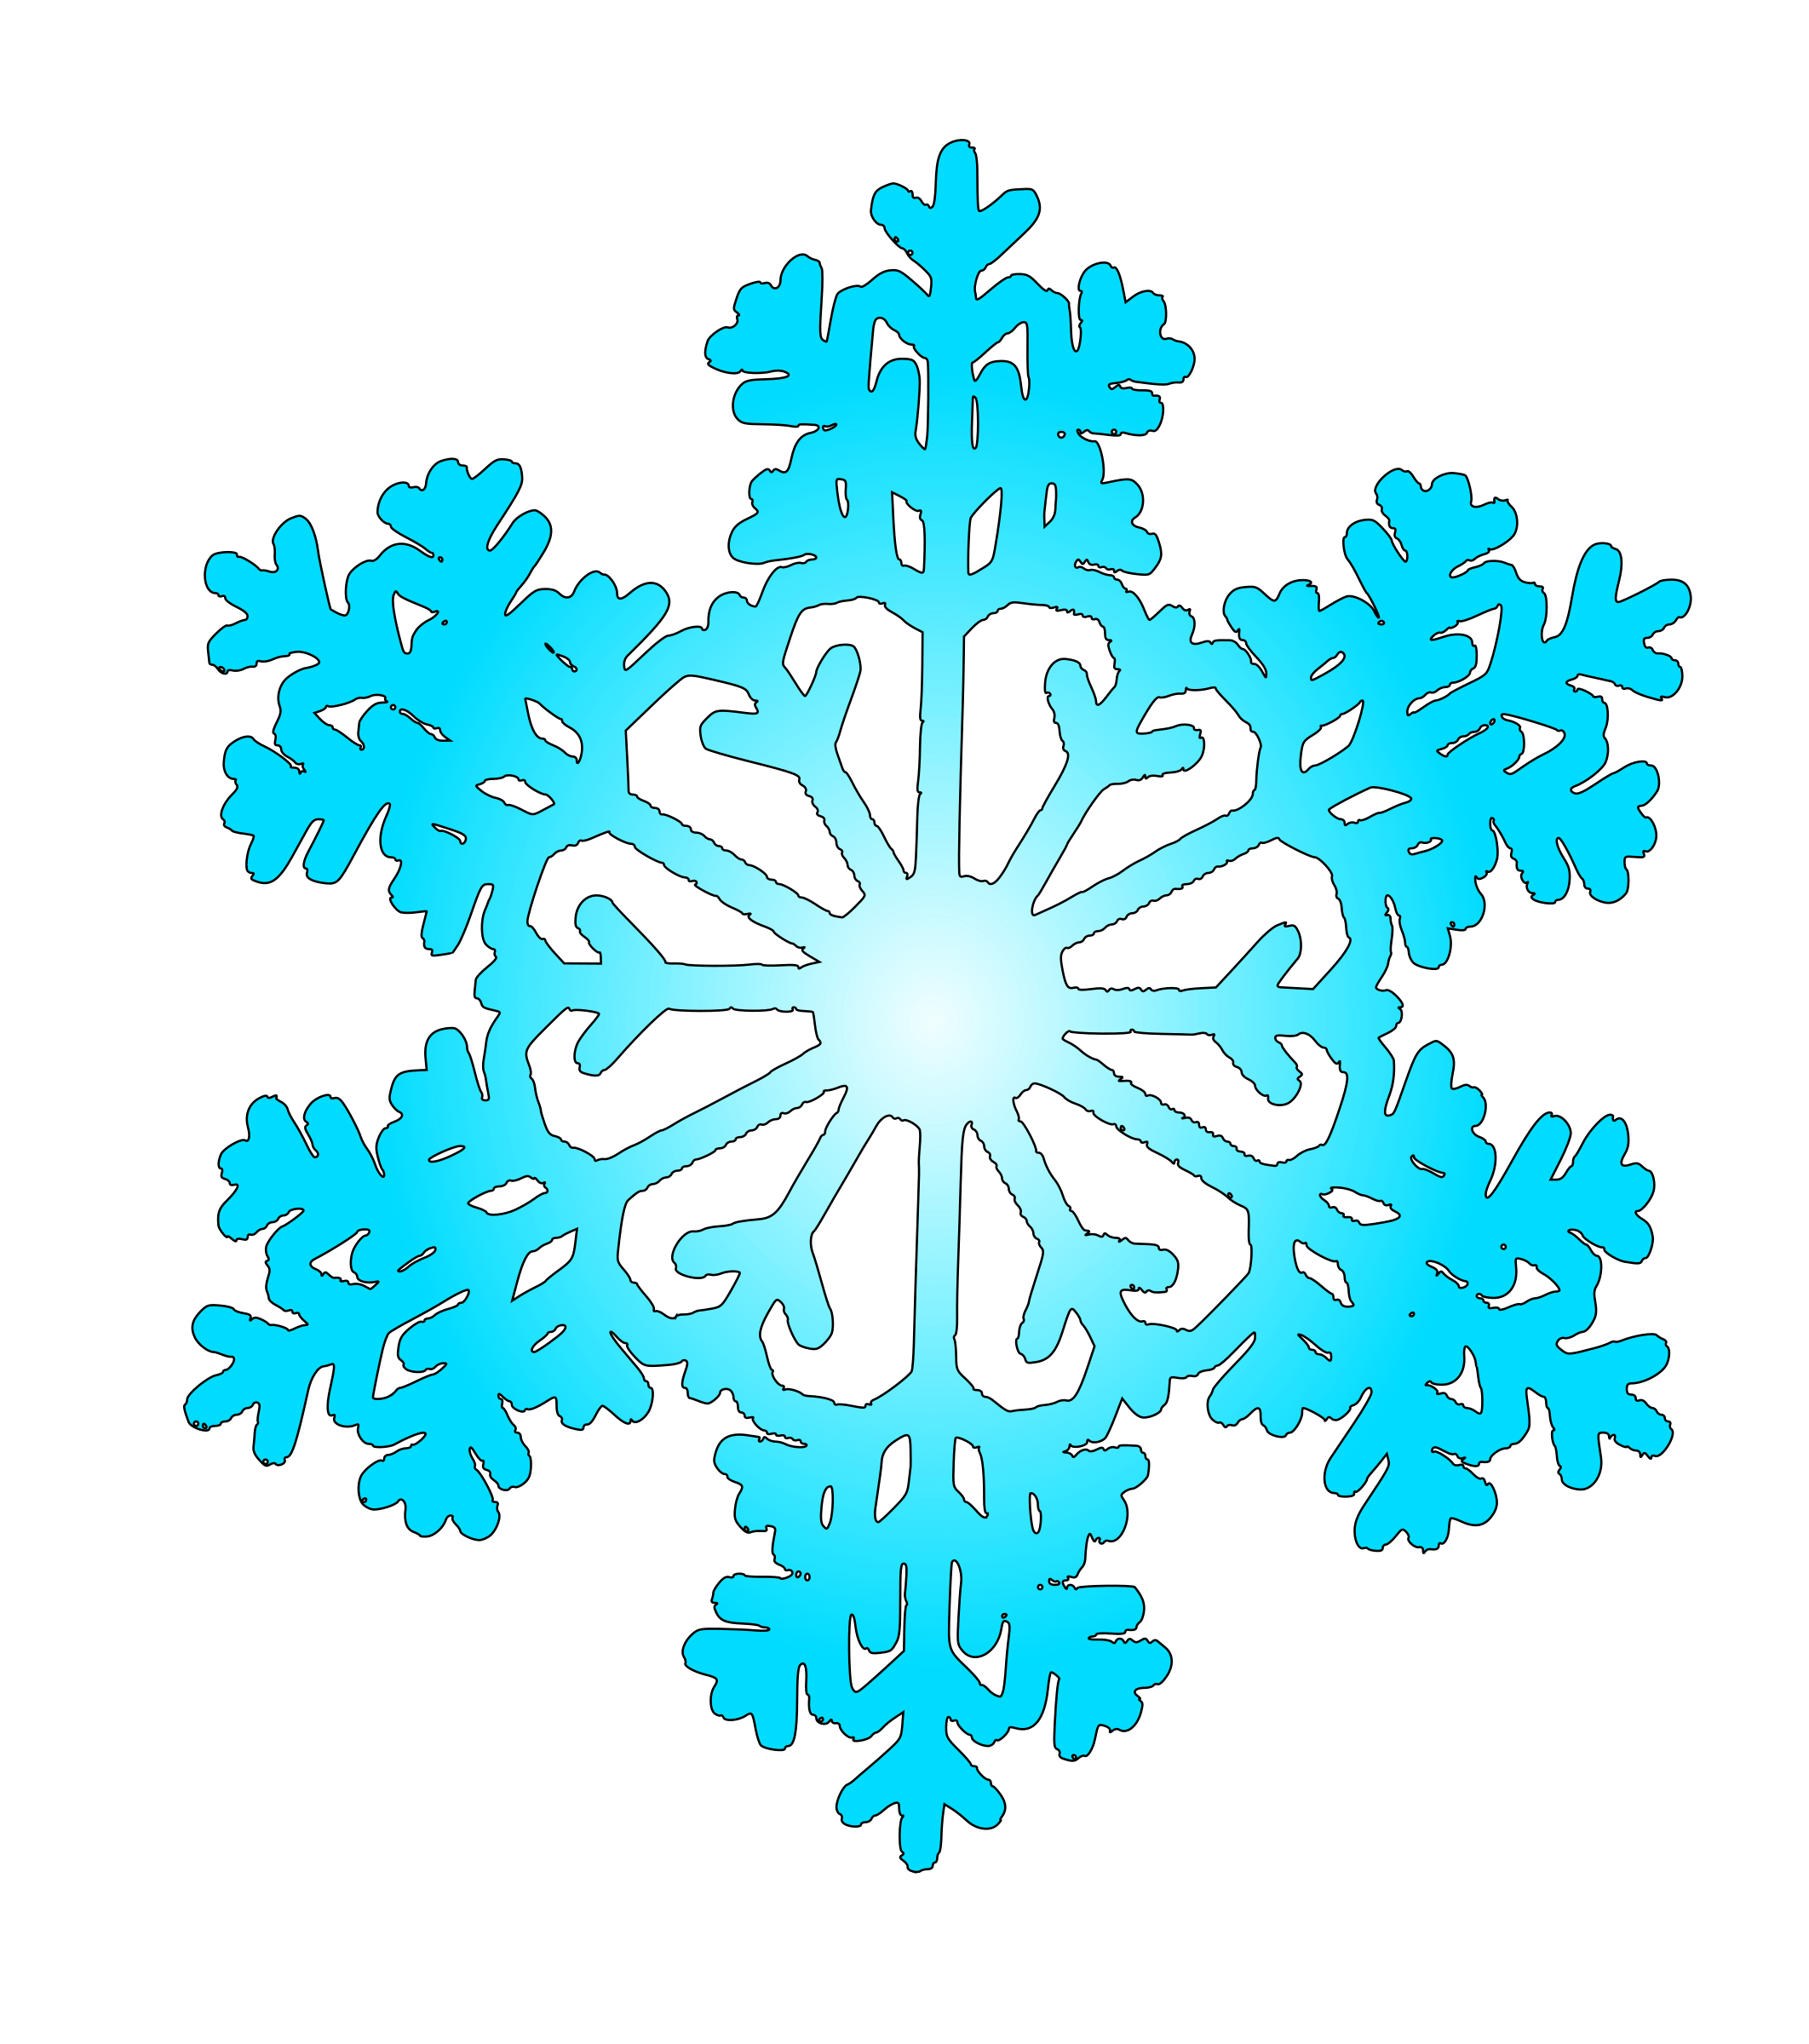 Снежинки картинки. Снежинка рисунок. Снежинки голубые. Снежинки цветные. Снежинки картинки для детей.